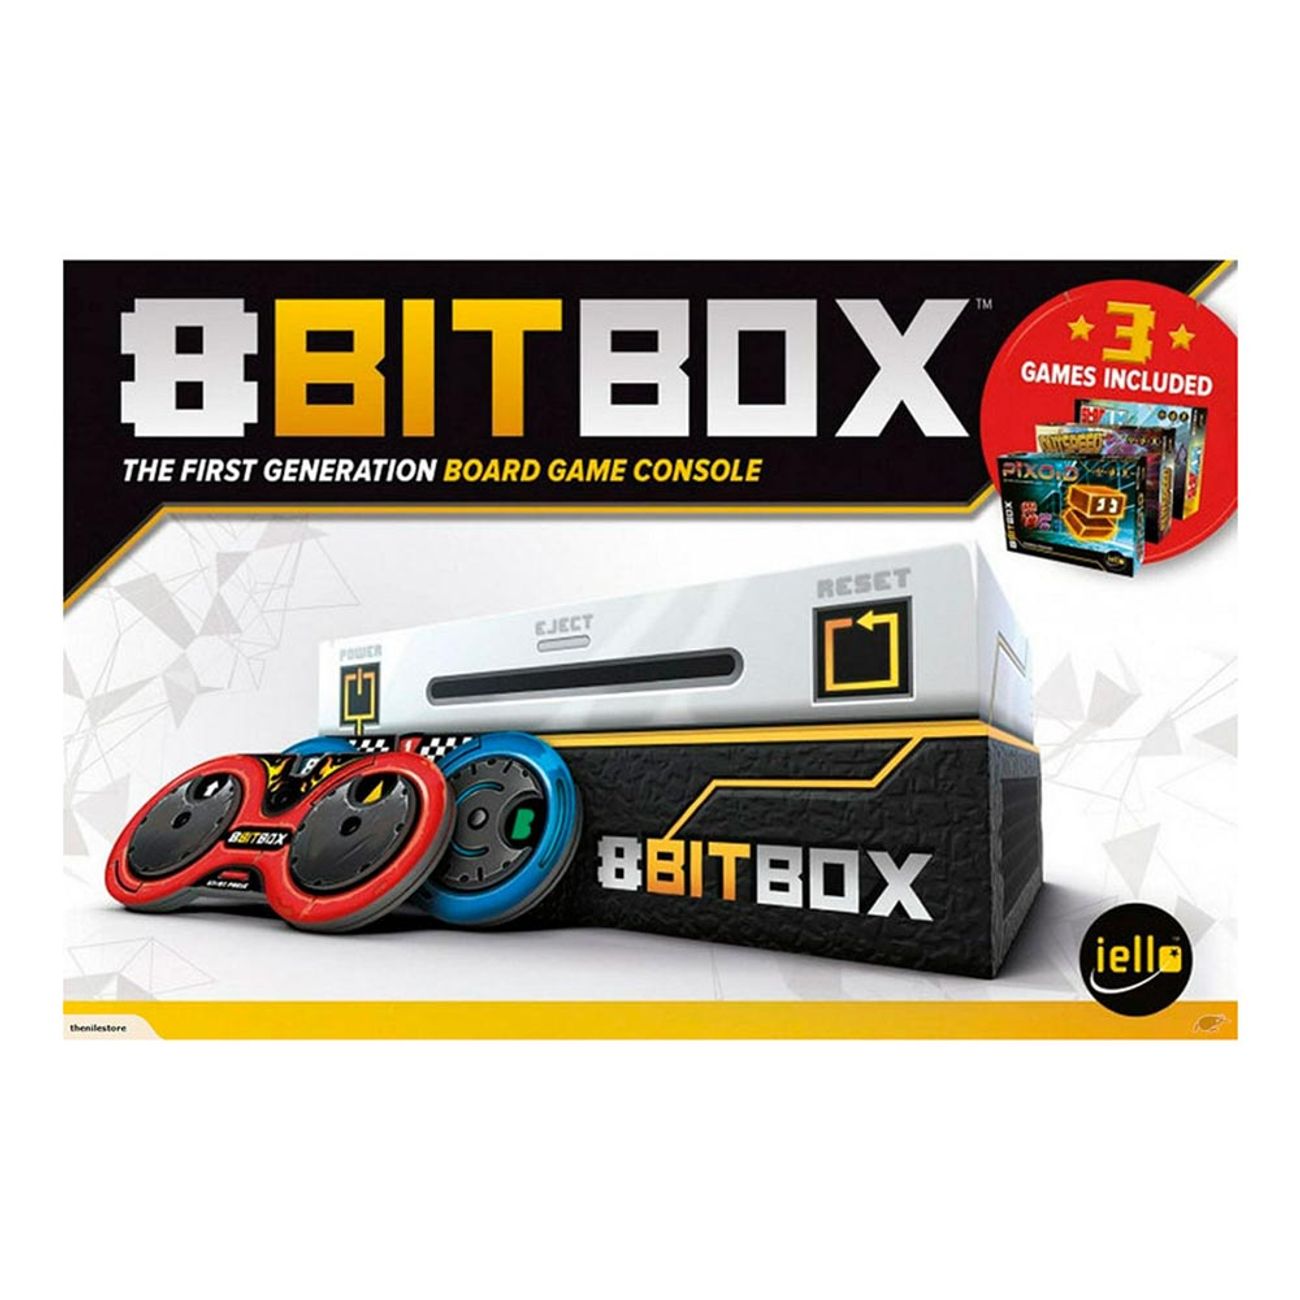 8-bit-box-bradspel-1